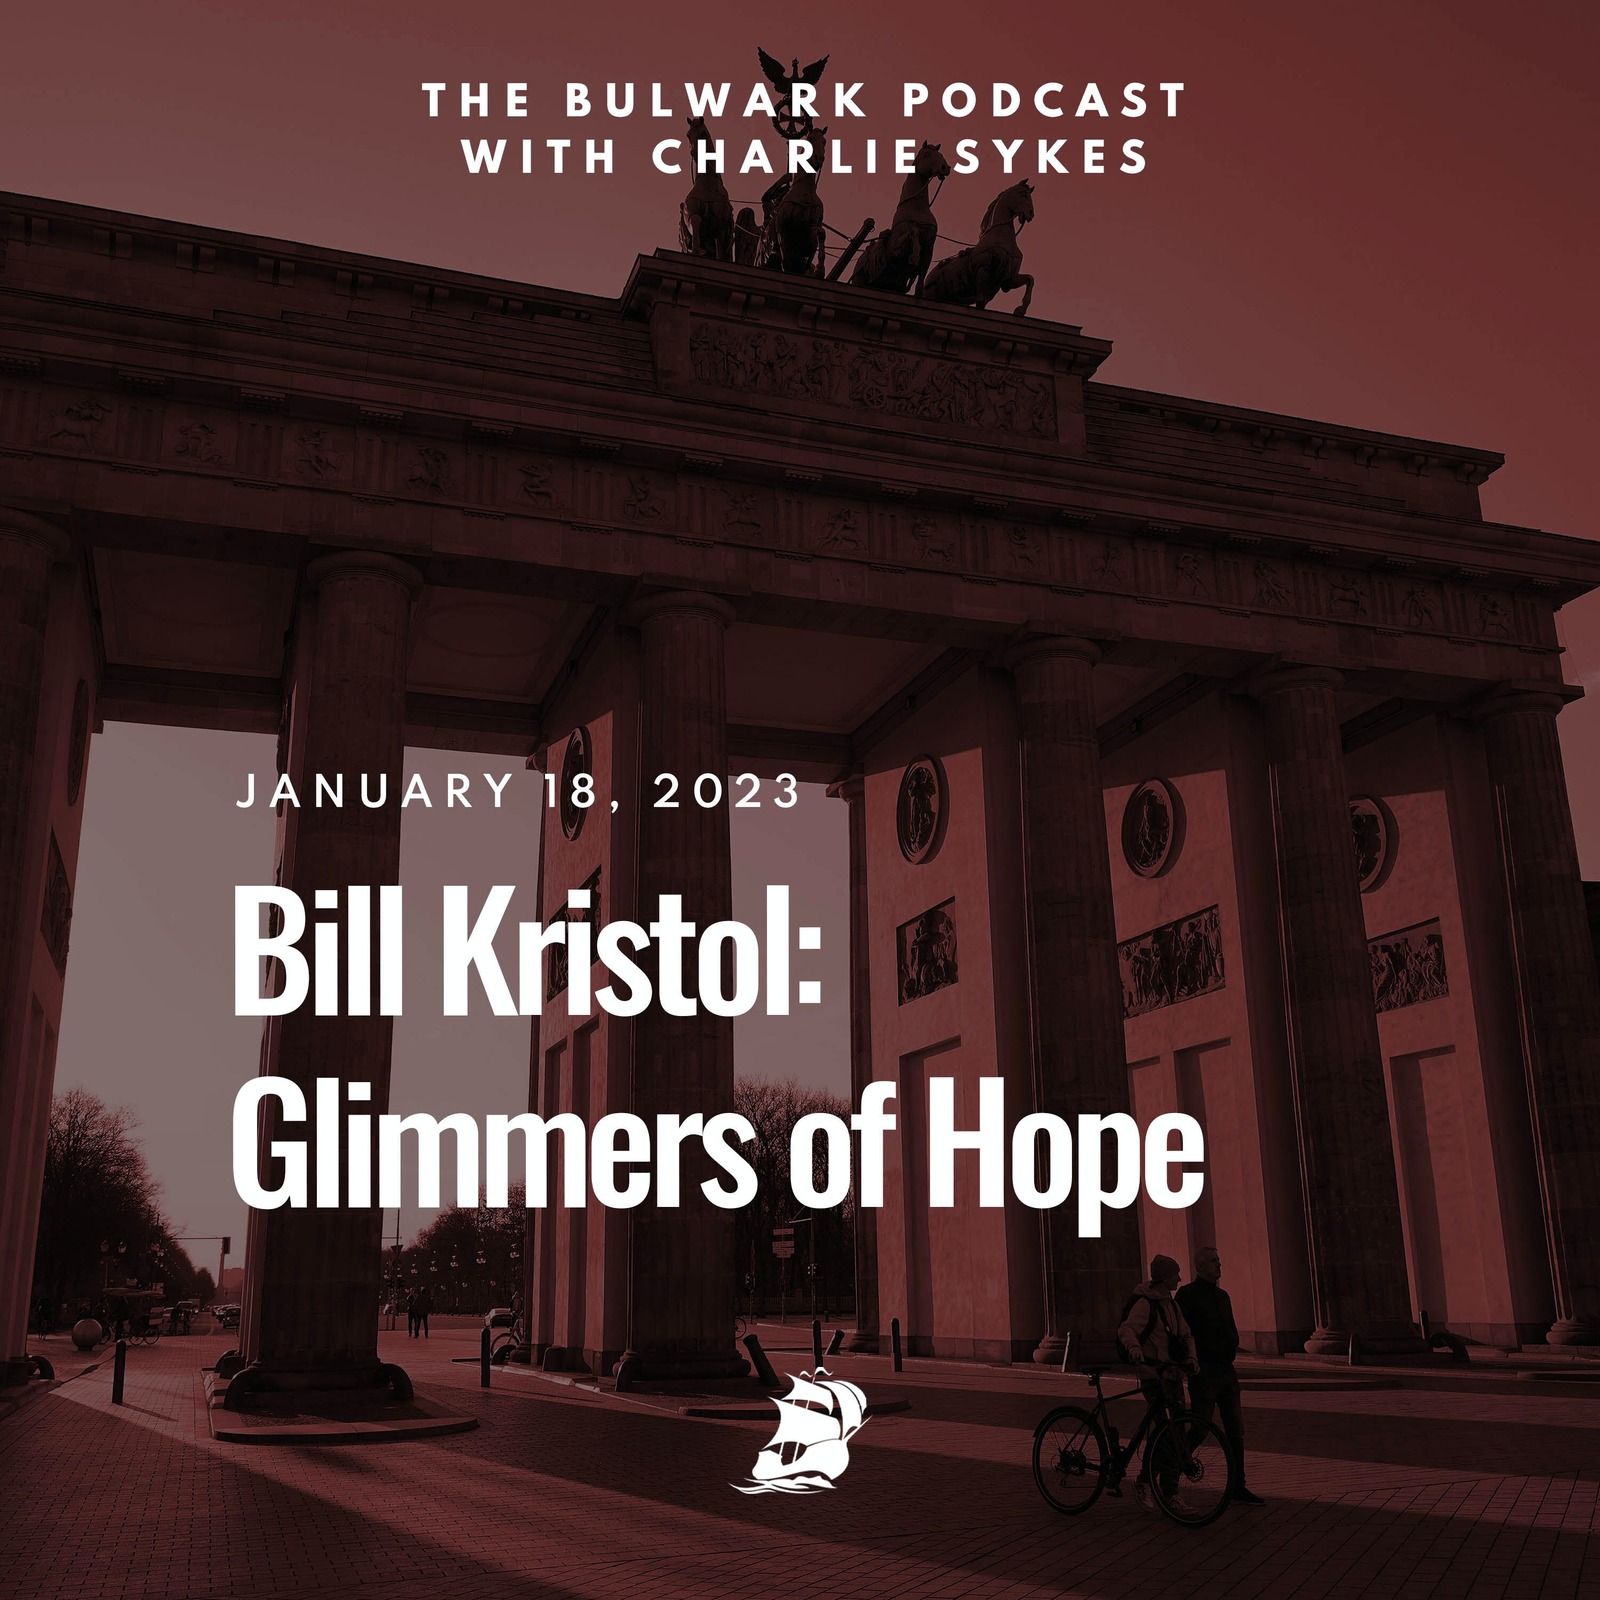 Bill Kristol: Glimmers of Hope